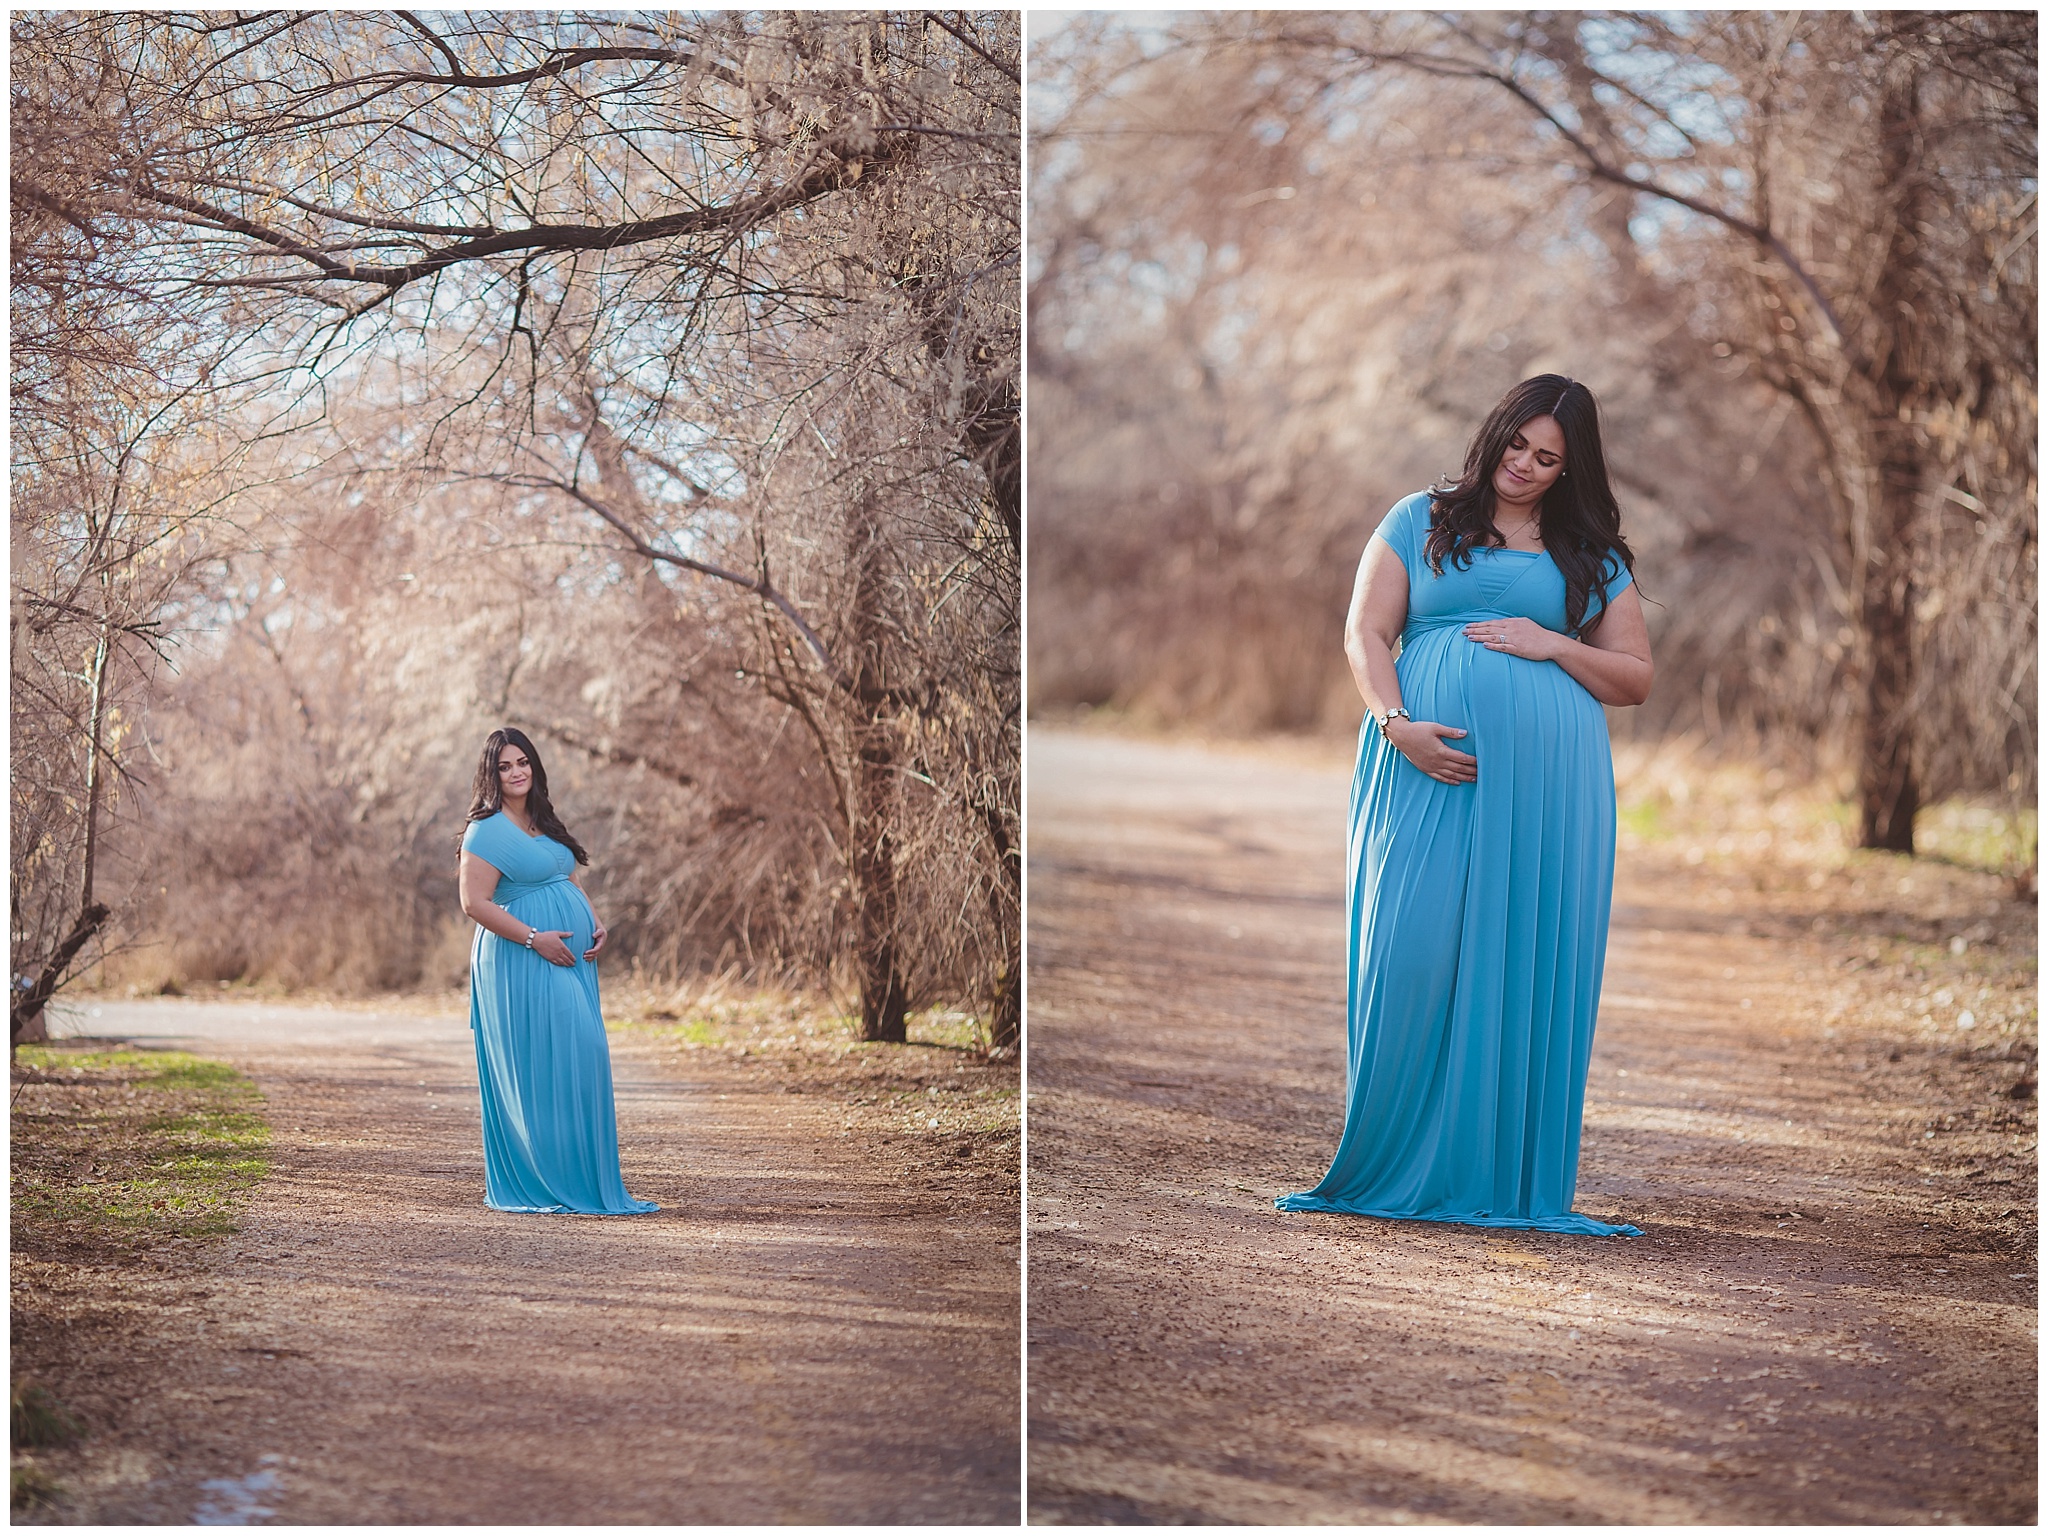 Beka Price Photography,Jordan River Parkway,maternity session,motherhood,